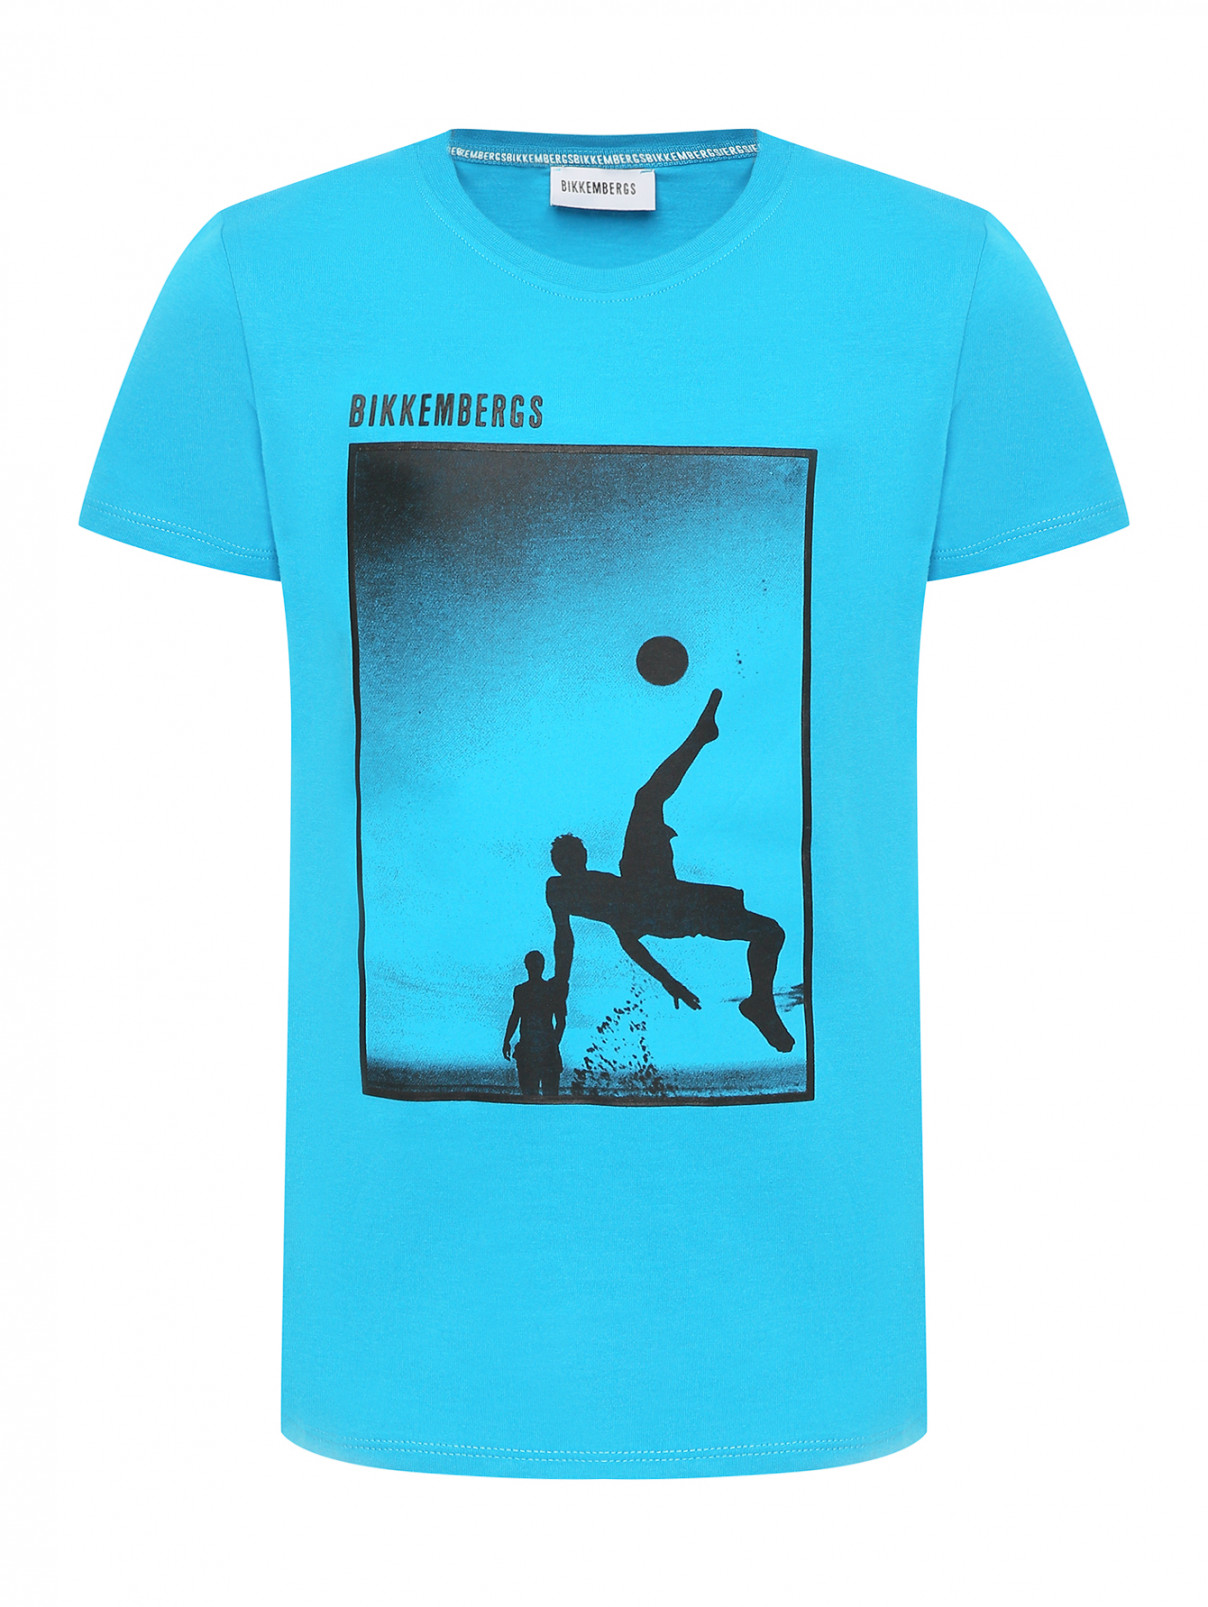 Футболка из трикотажа с принтом Bikkembergs  –  Общий вид  – Цвет:  Синий